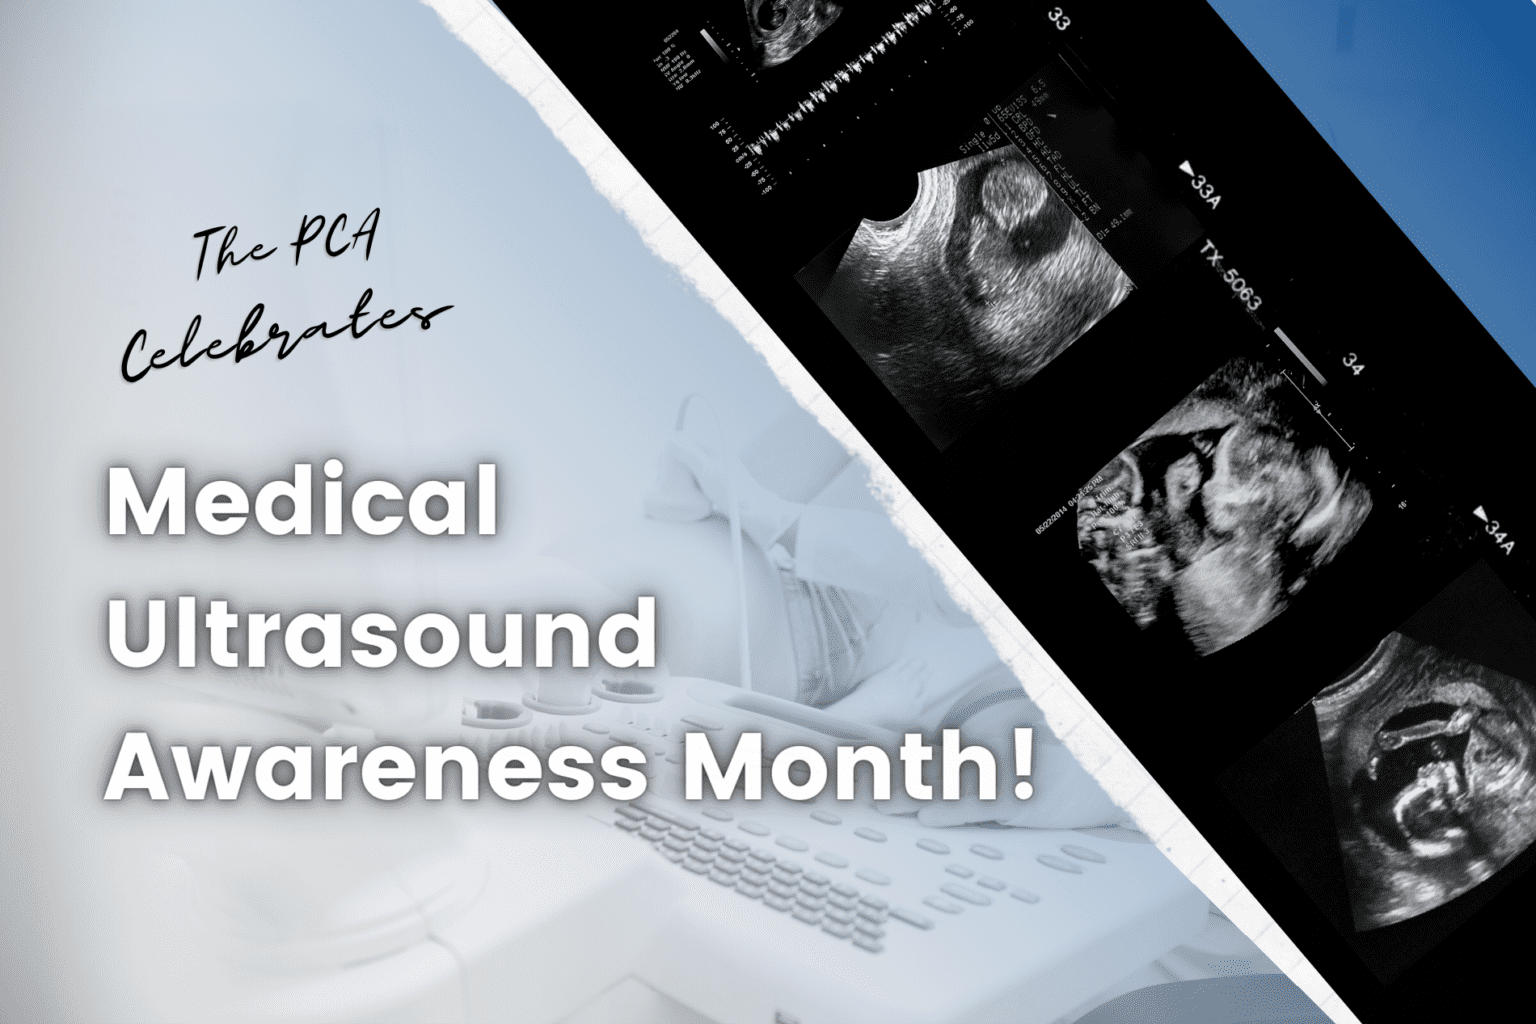 The PCA Celebrates Medical Ultrasound Awareness Month!